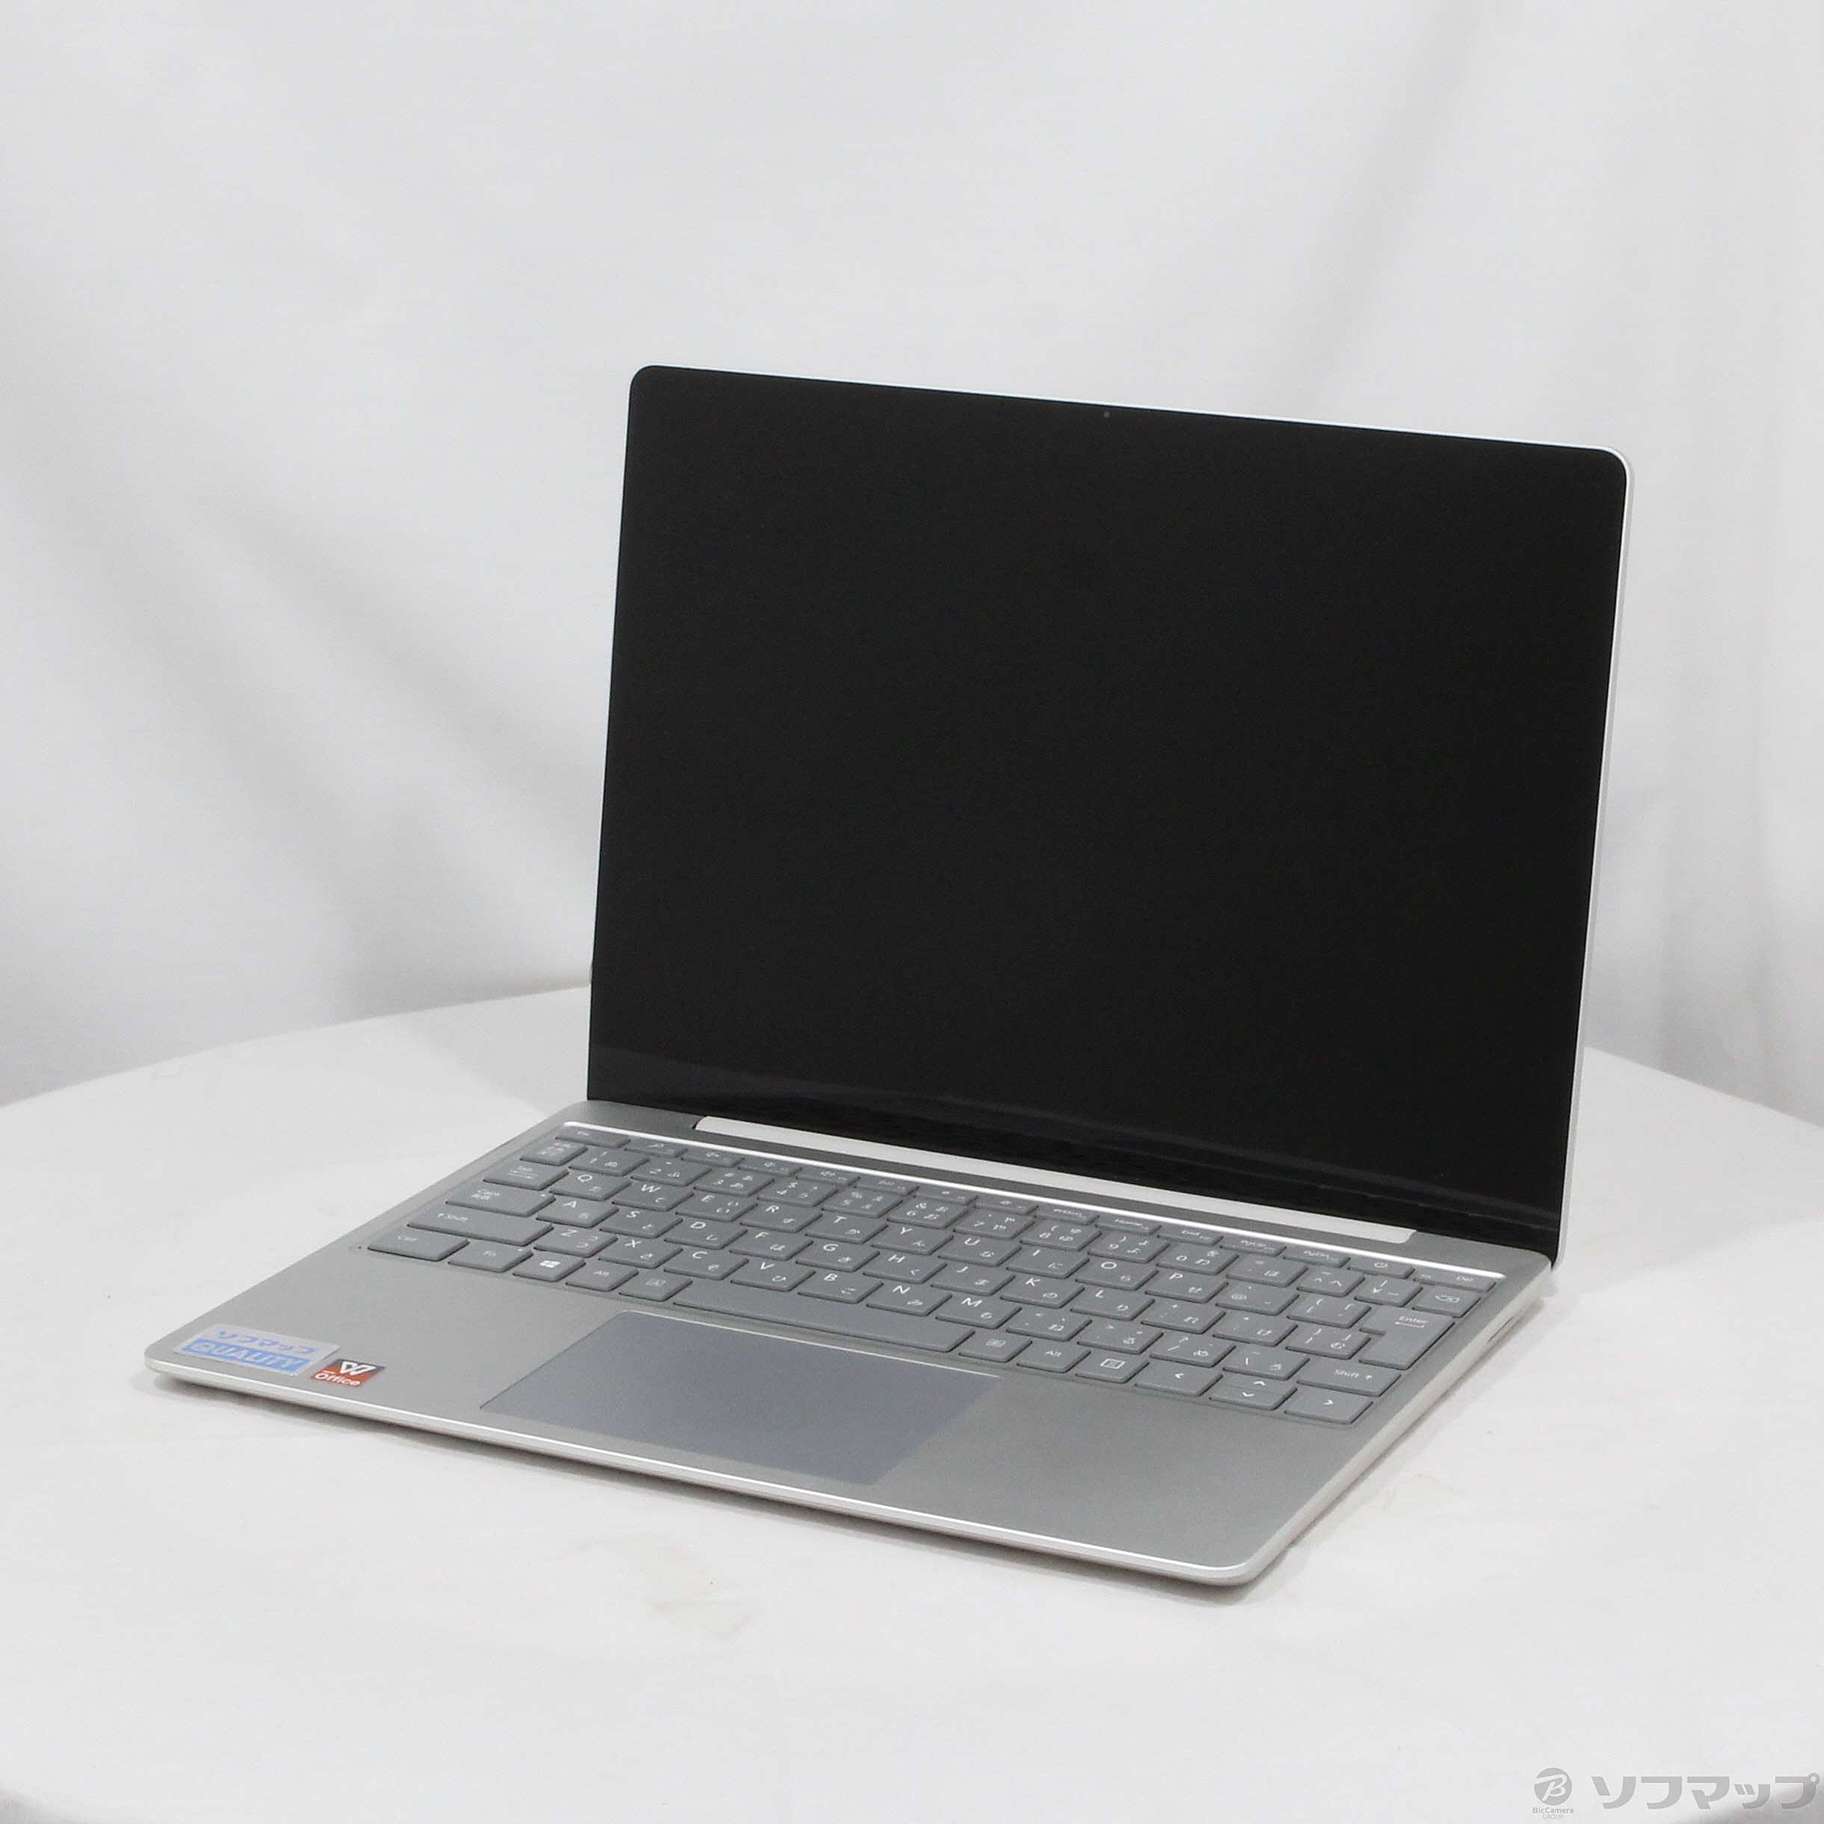 中古品〕 Surface Laptop Go 〔Core i5／4GB／eMMC64GB〕 1ZO-00020 ...